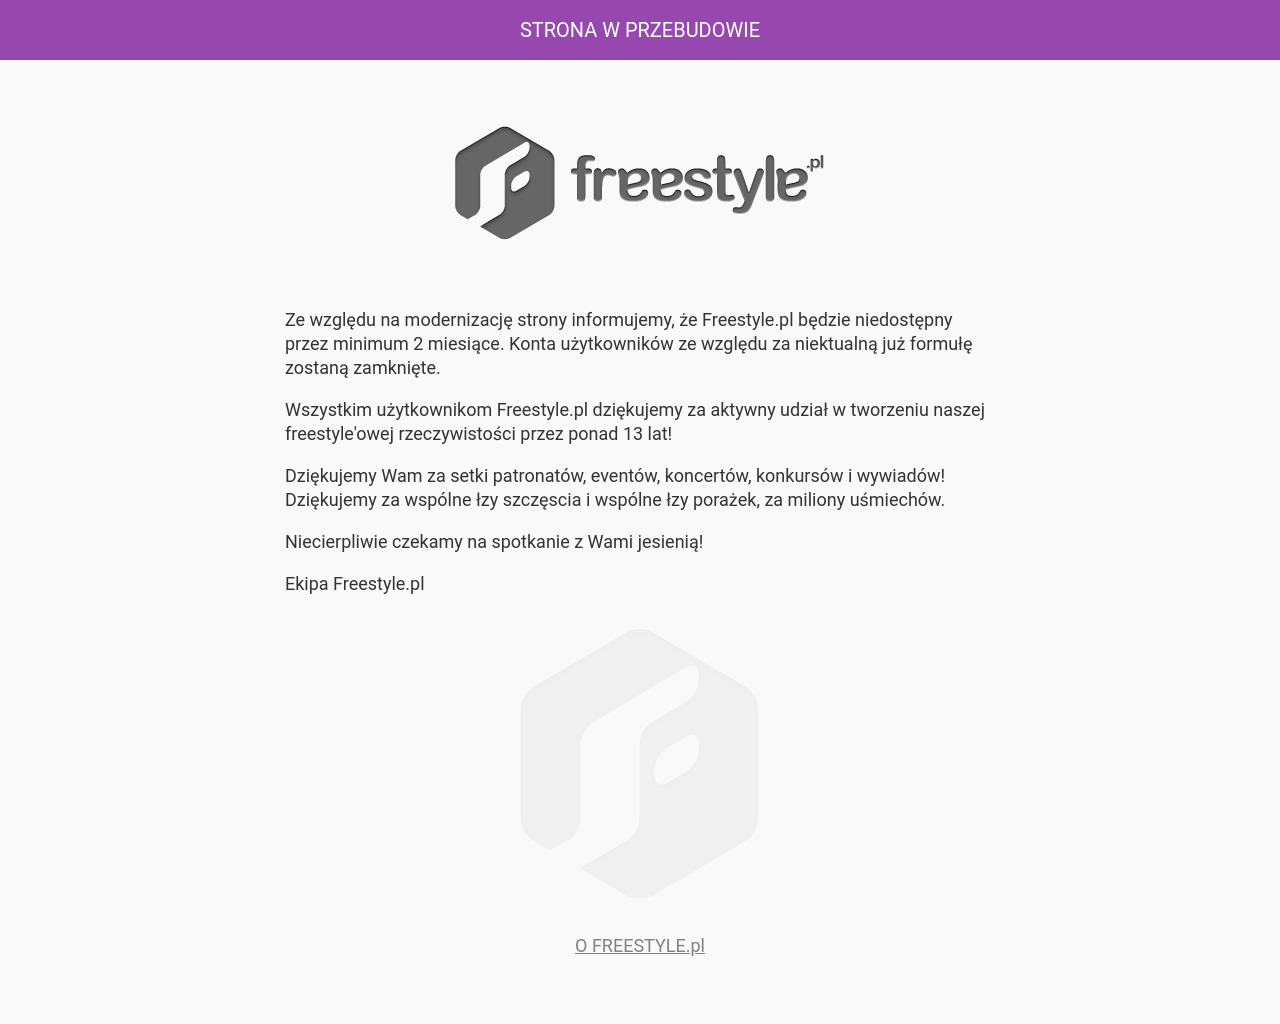 freestyle.pl